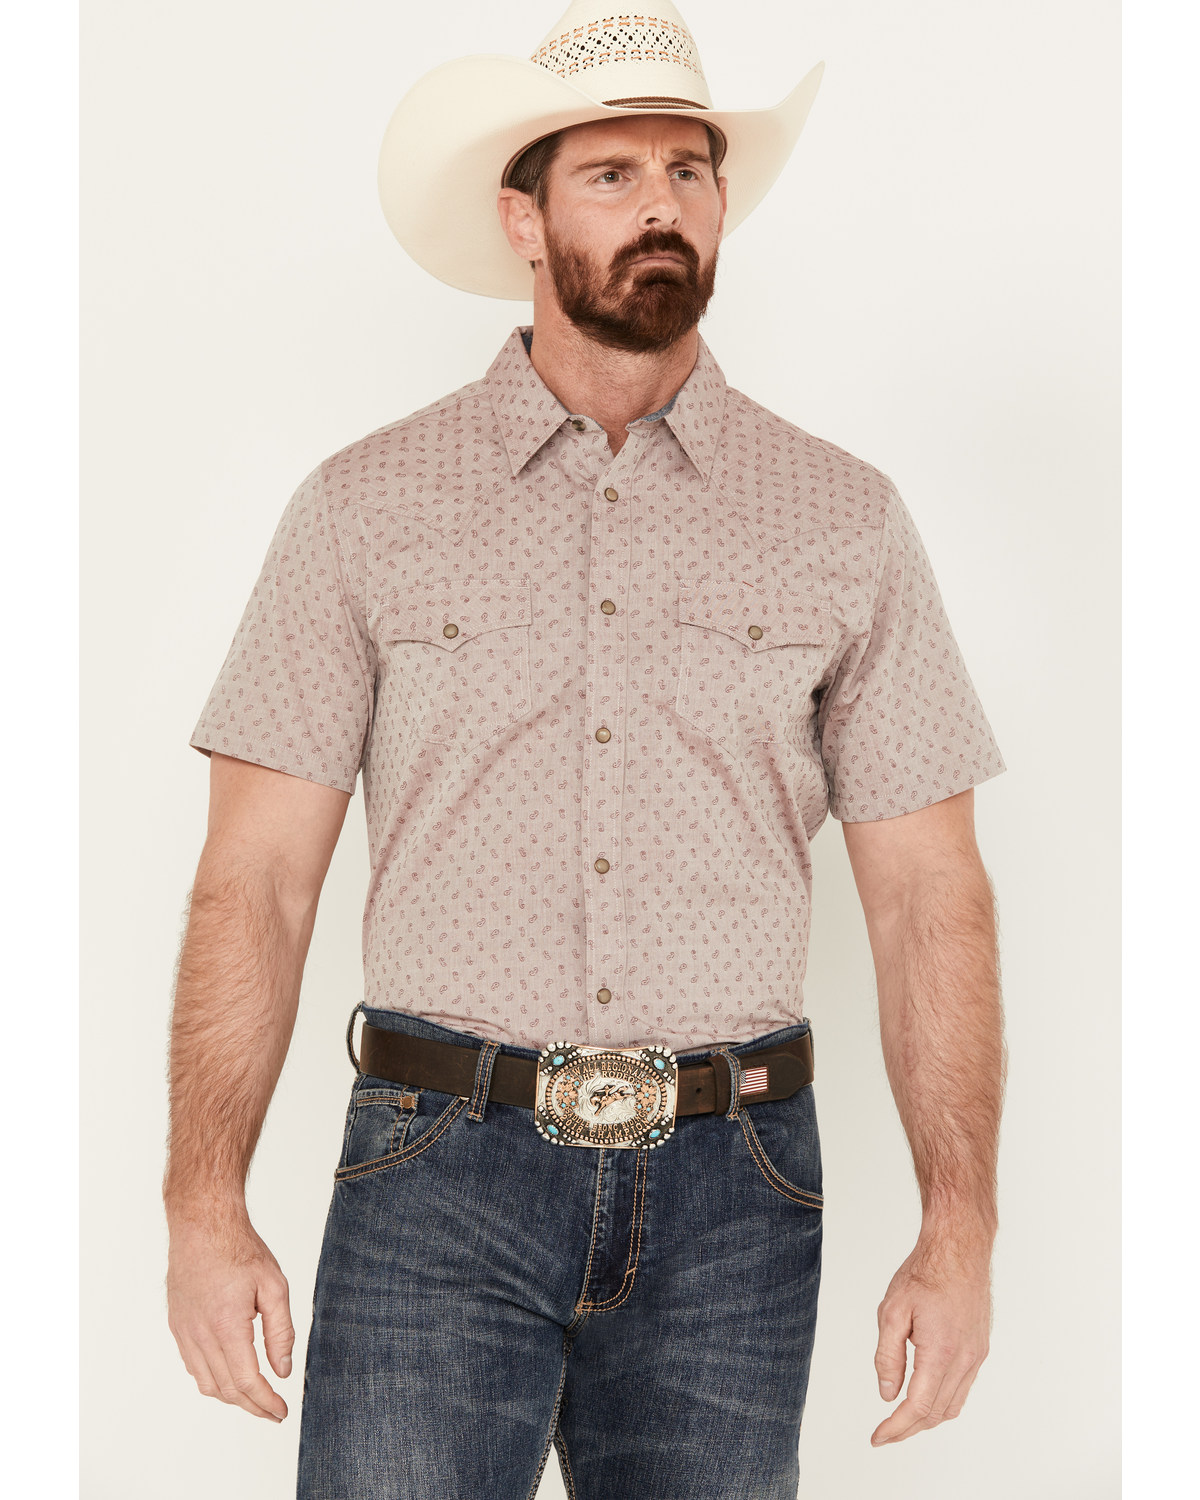 Cody James Men's Micro Paisley Print Short Sleeve Snap Western Shirt